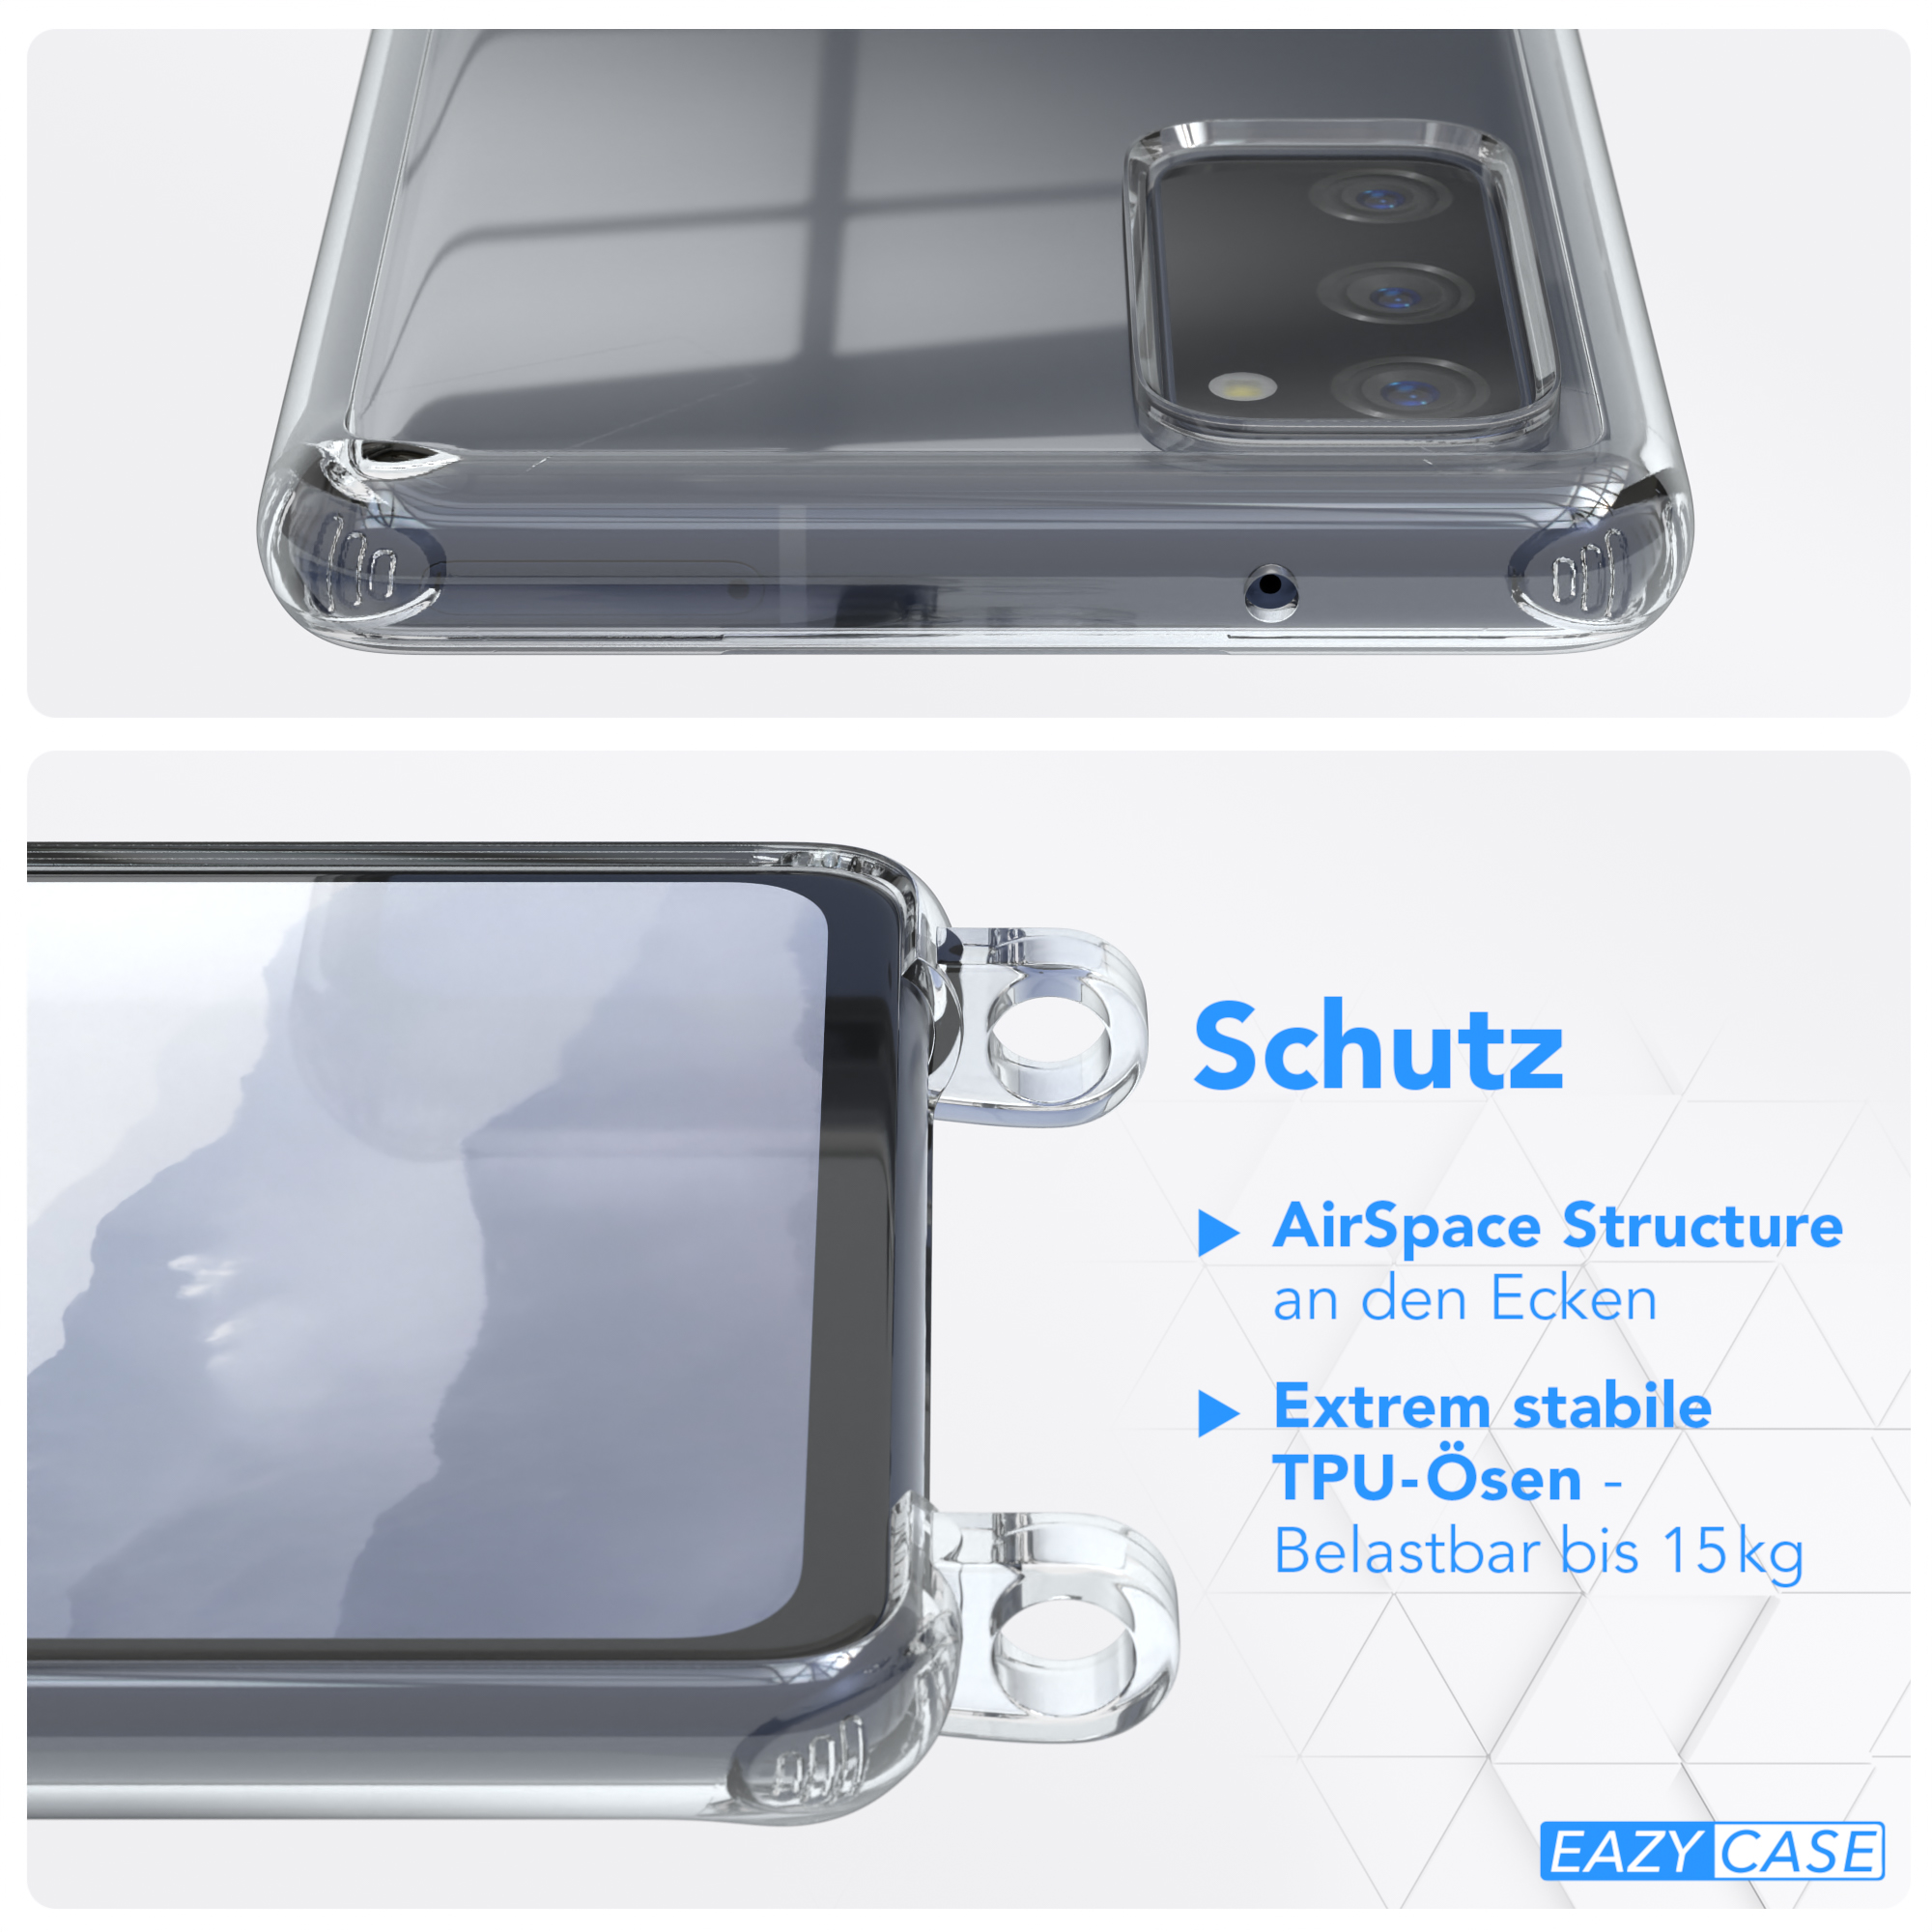 CASE FE Cover Clear / Blau S20 Samsung, FE 5G, S20 mit Galaxy Umhängetasche, Umhängeband, EAZY